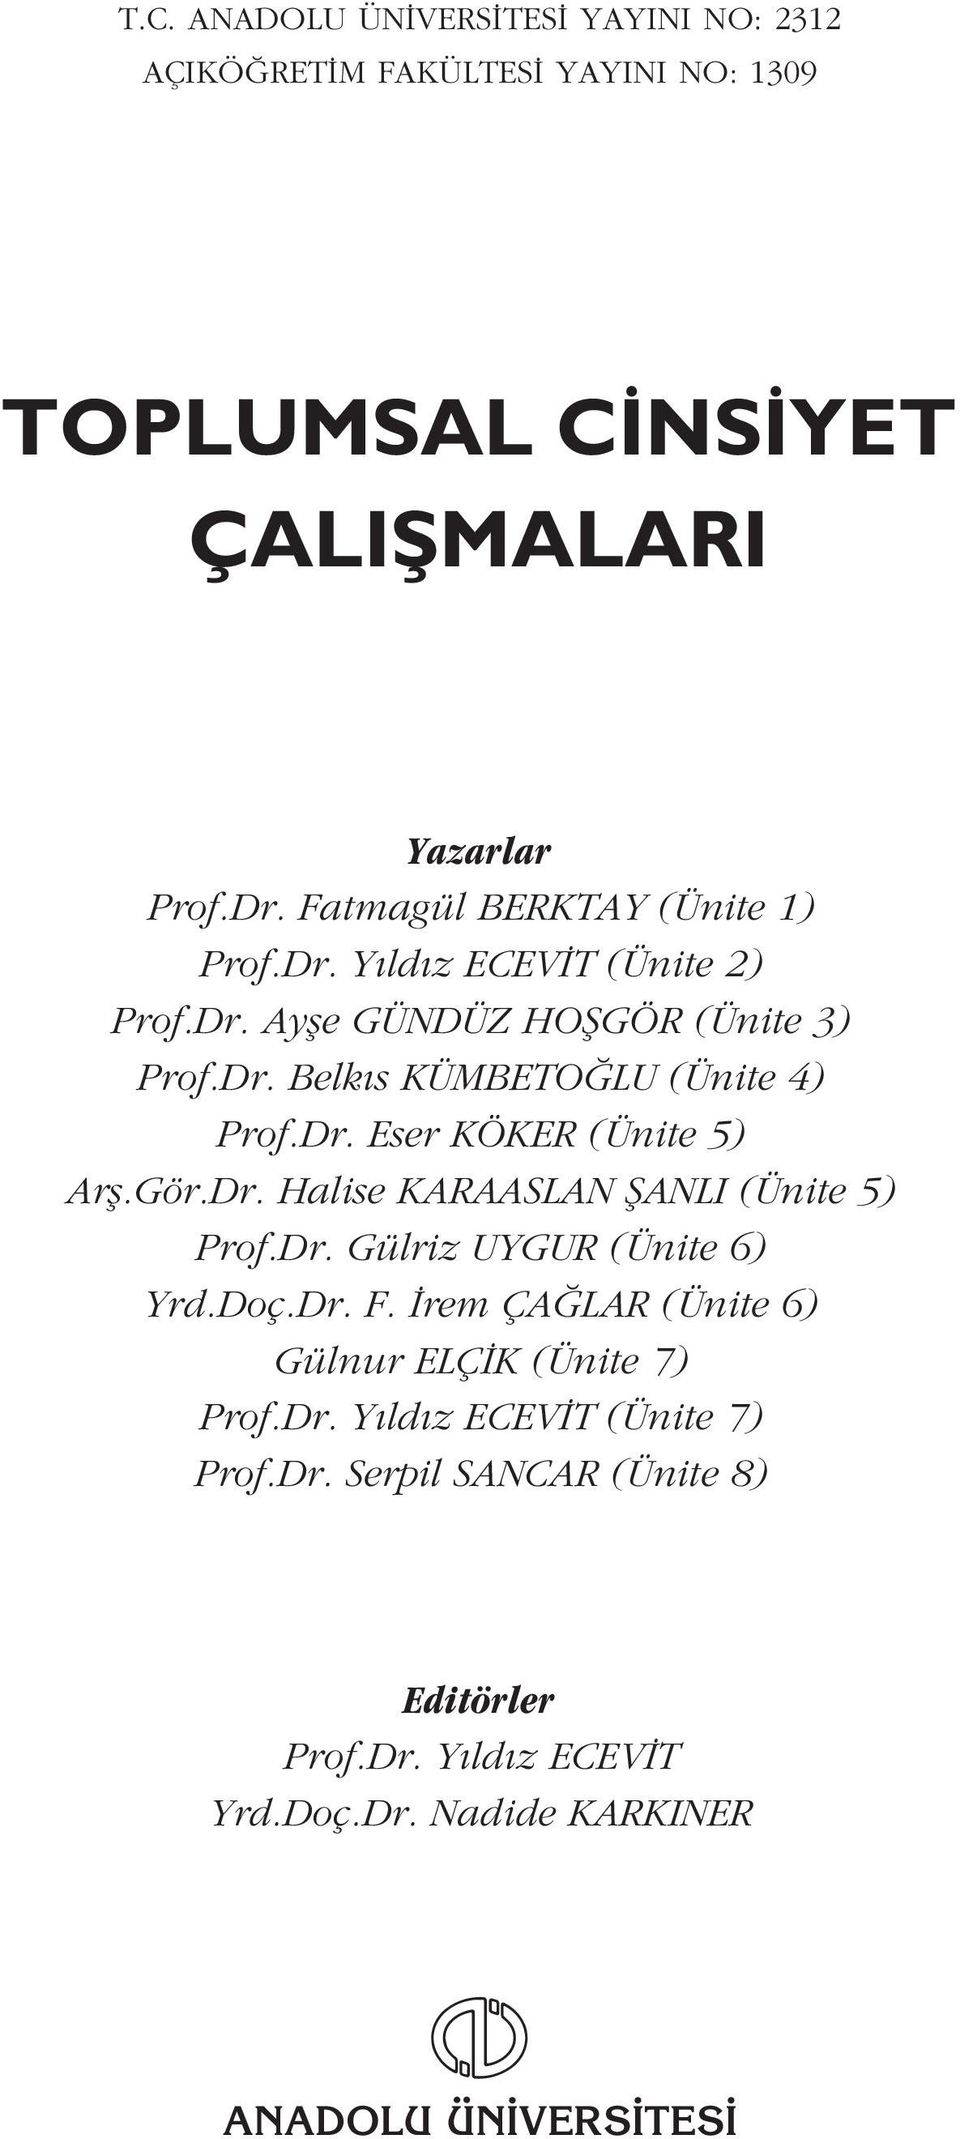 Gör.Dr. Halise KARAASLAN fianli (Ünite 5) Prof.Dr. Gülriz UYGUR (Ünite 6) Yrd.Doç.Dr. F. rem ÇA LAR (Ünite 6) Gülnur ELÇ K (Ünite 7) Prof.Dr. Y ld z ECEV T (Ünite 7) Prof.